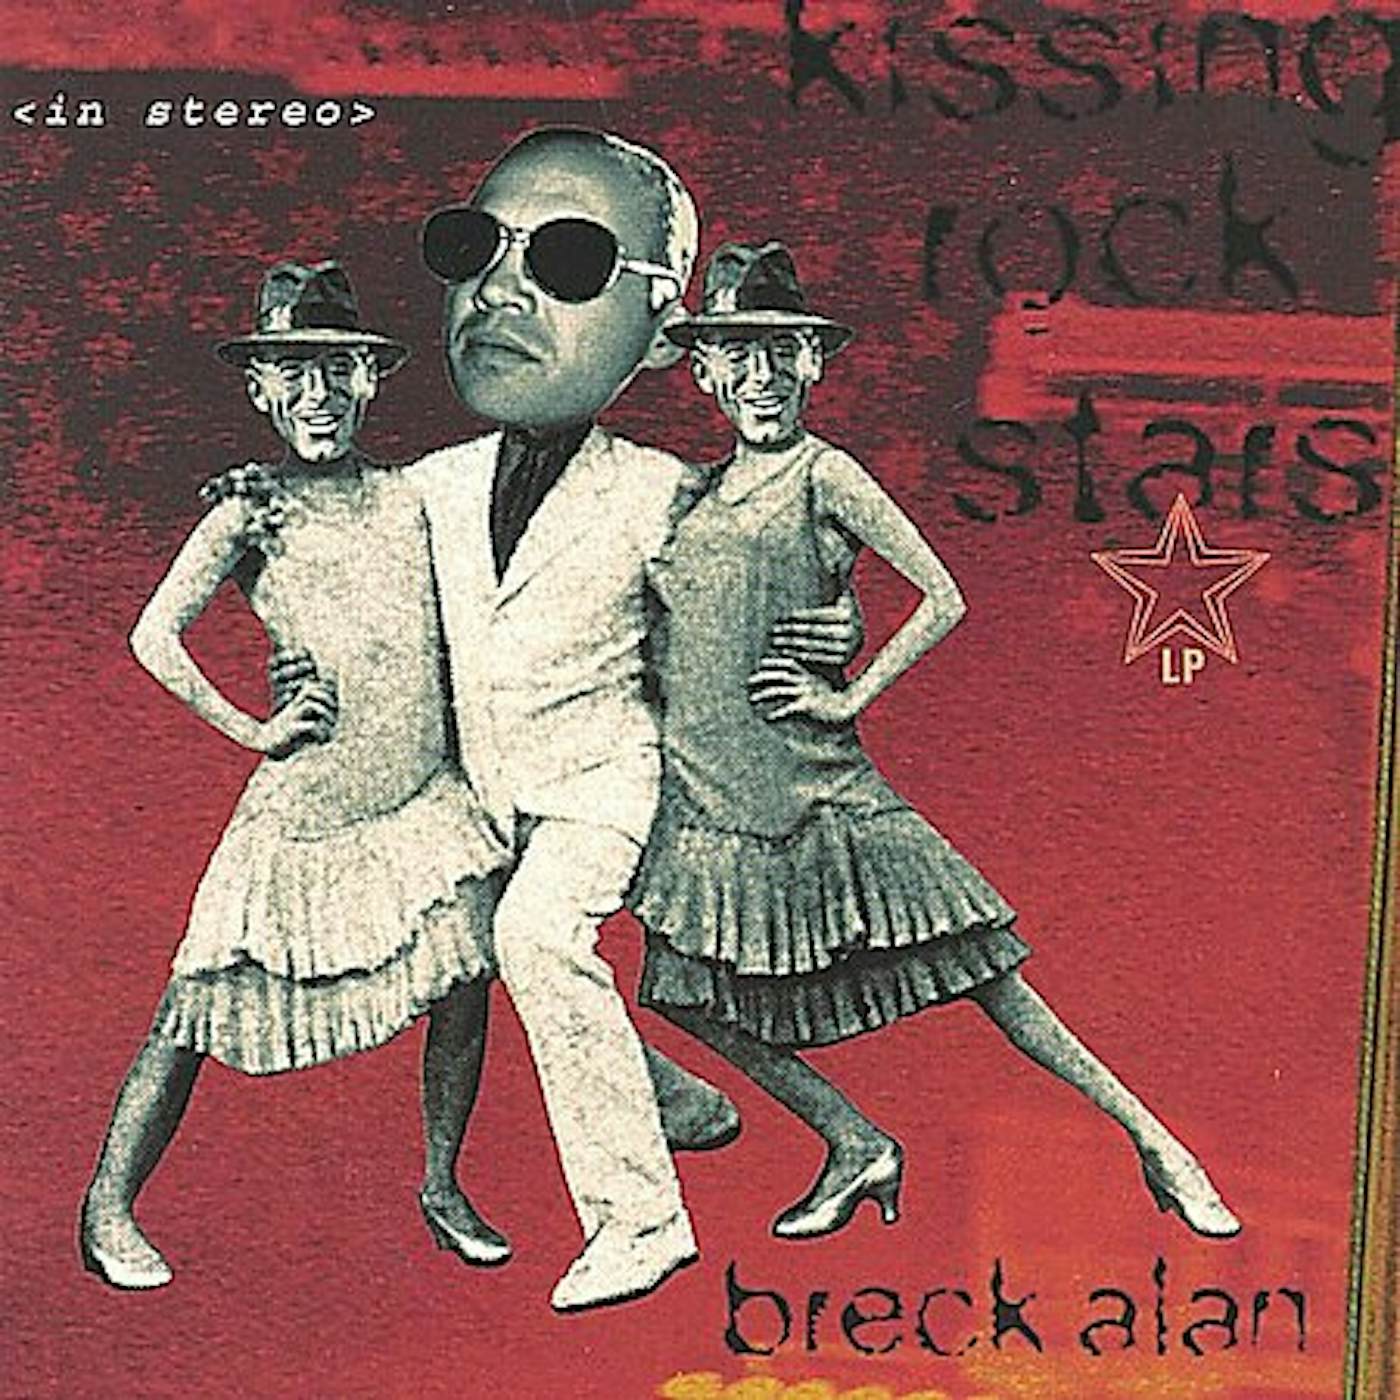 Breck Alan KISSING ROCKSTARS LP CD